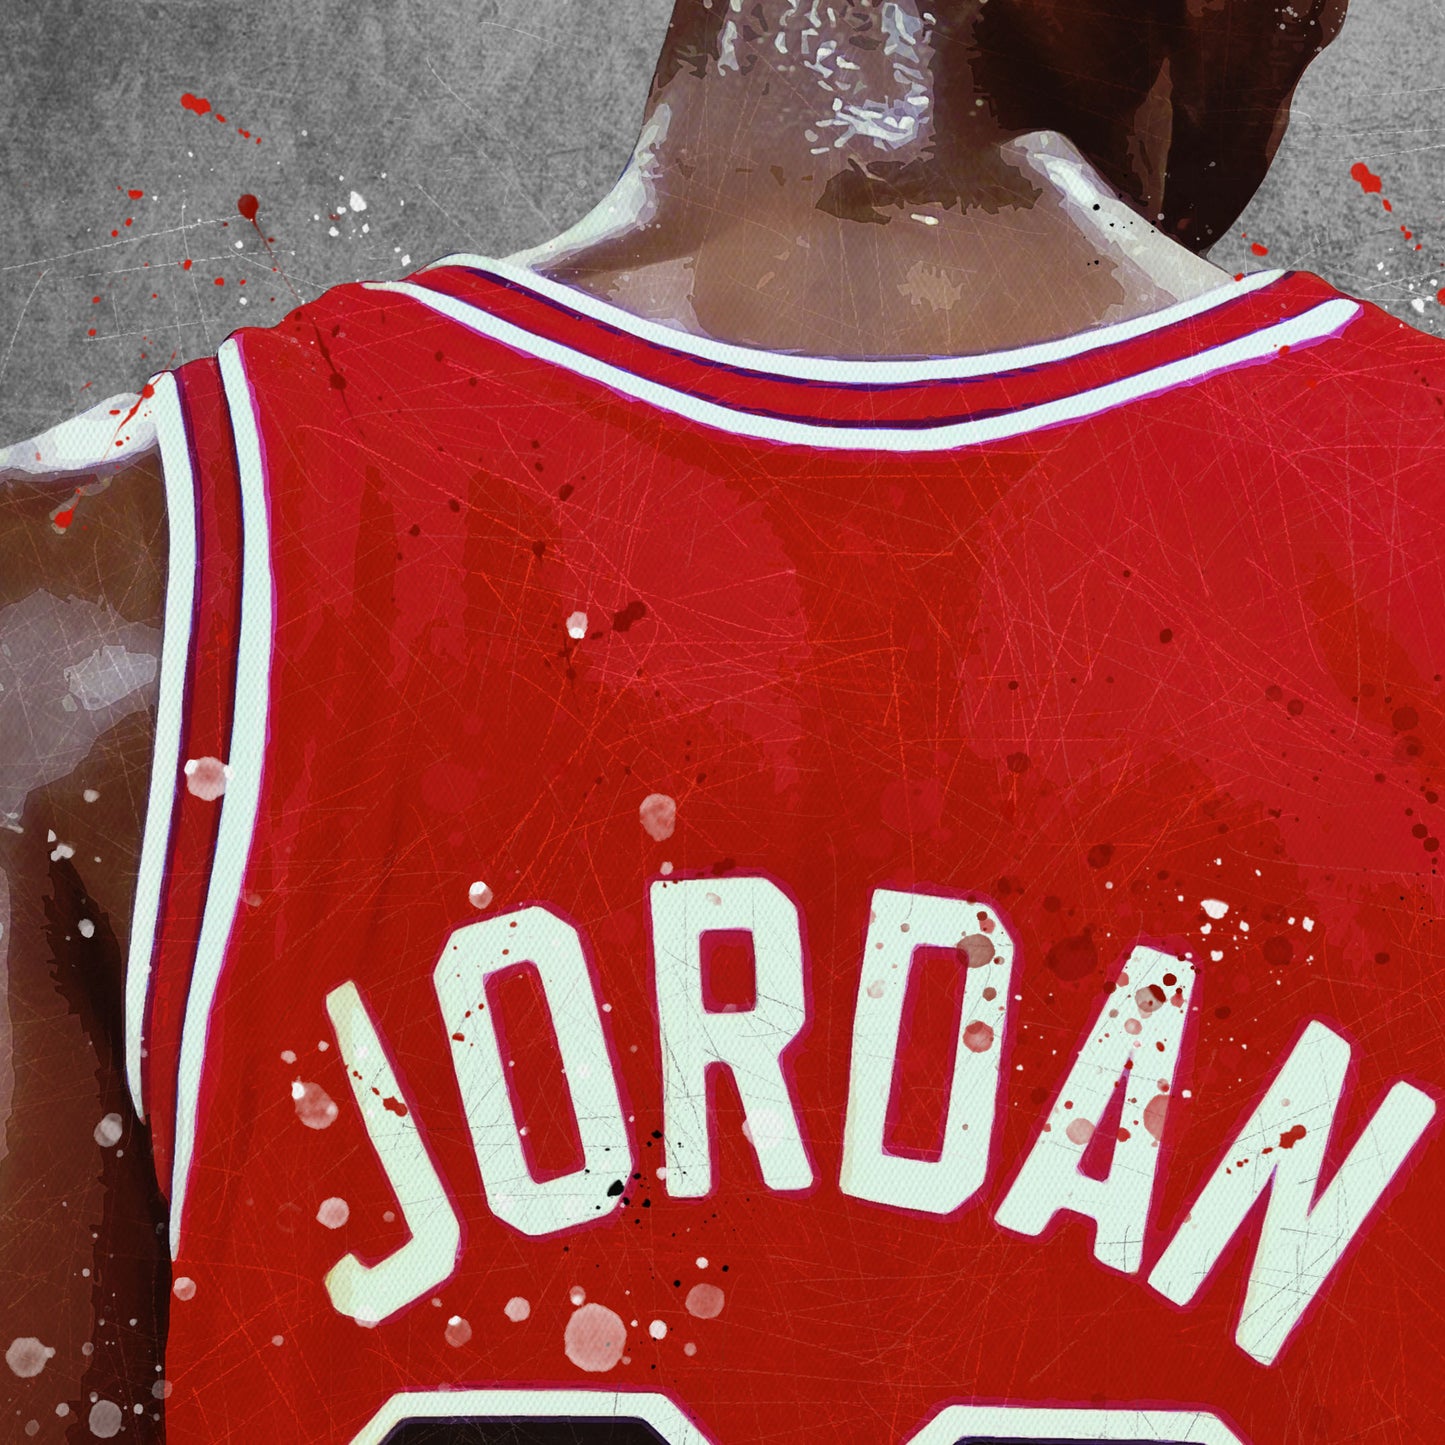 Jordan Red Jersey